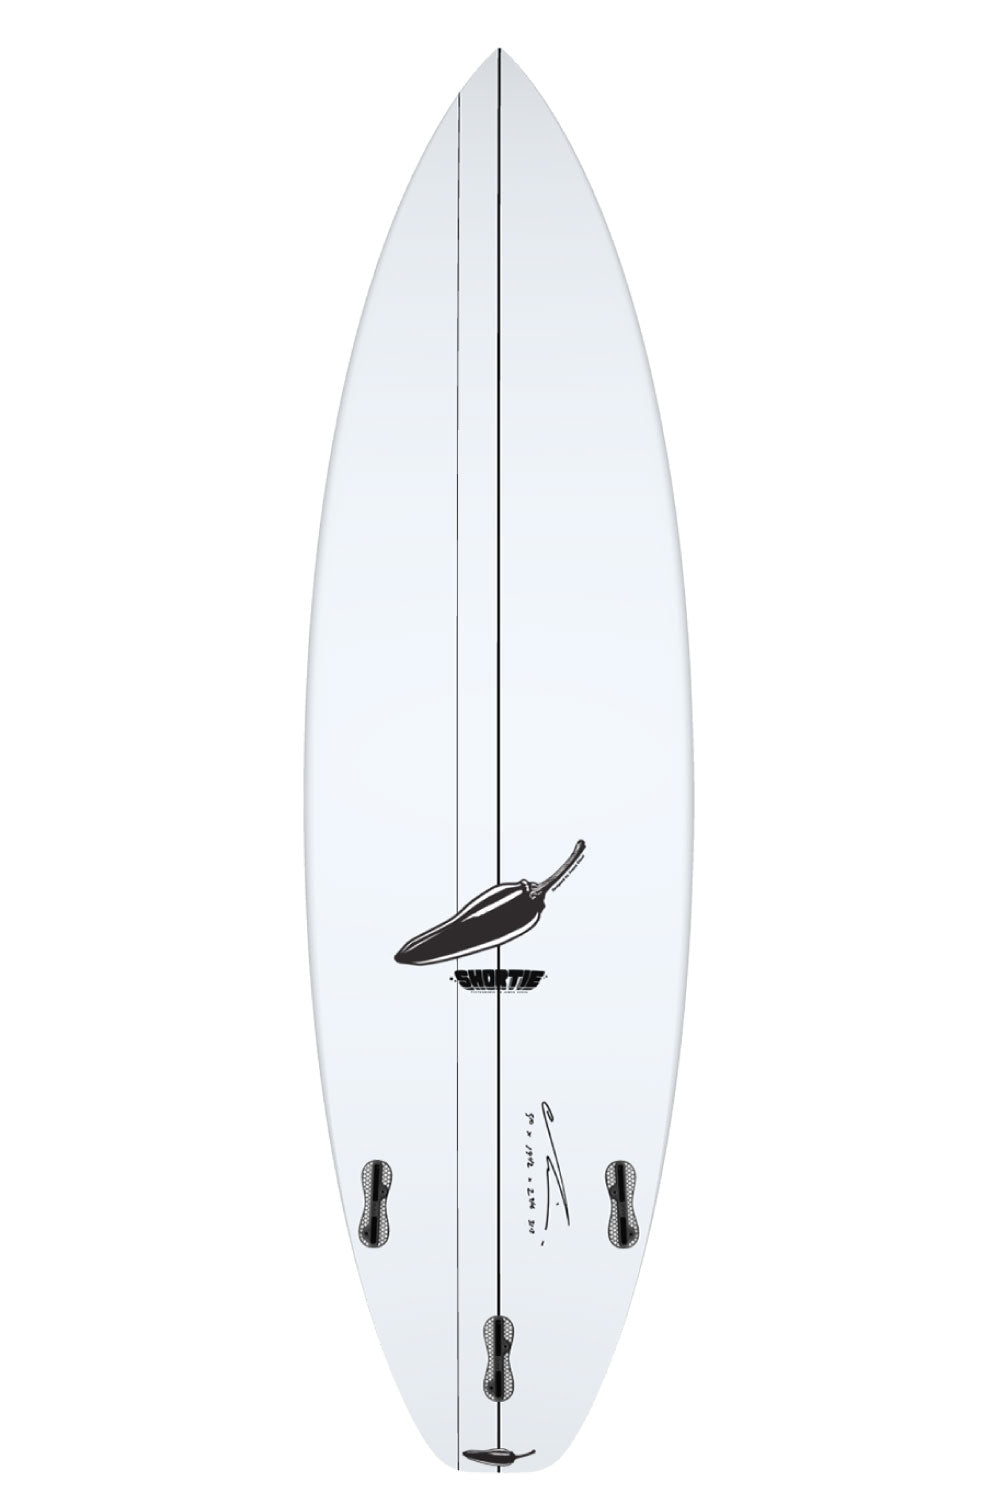 Chilli Shortie Surfboard - Squash Tail